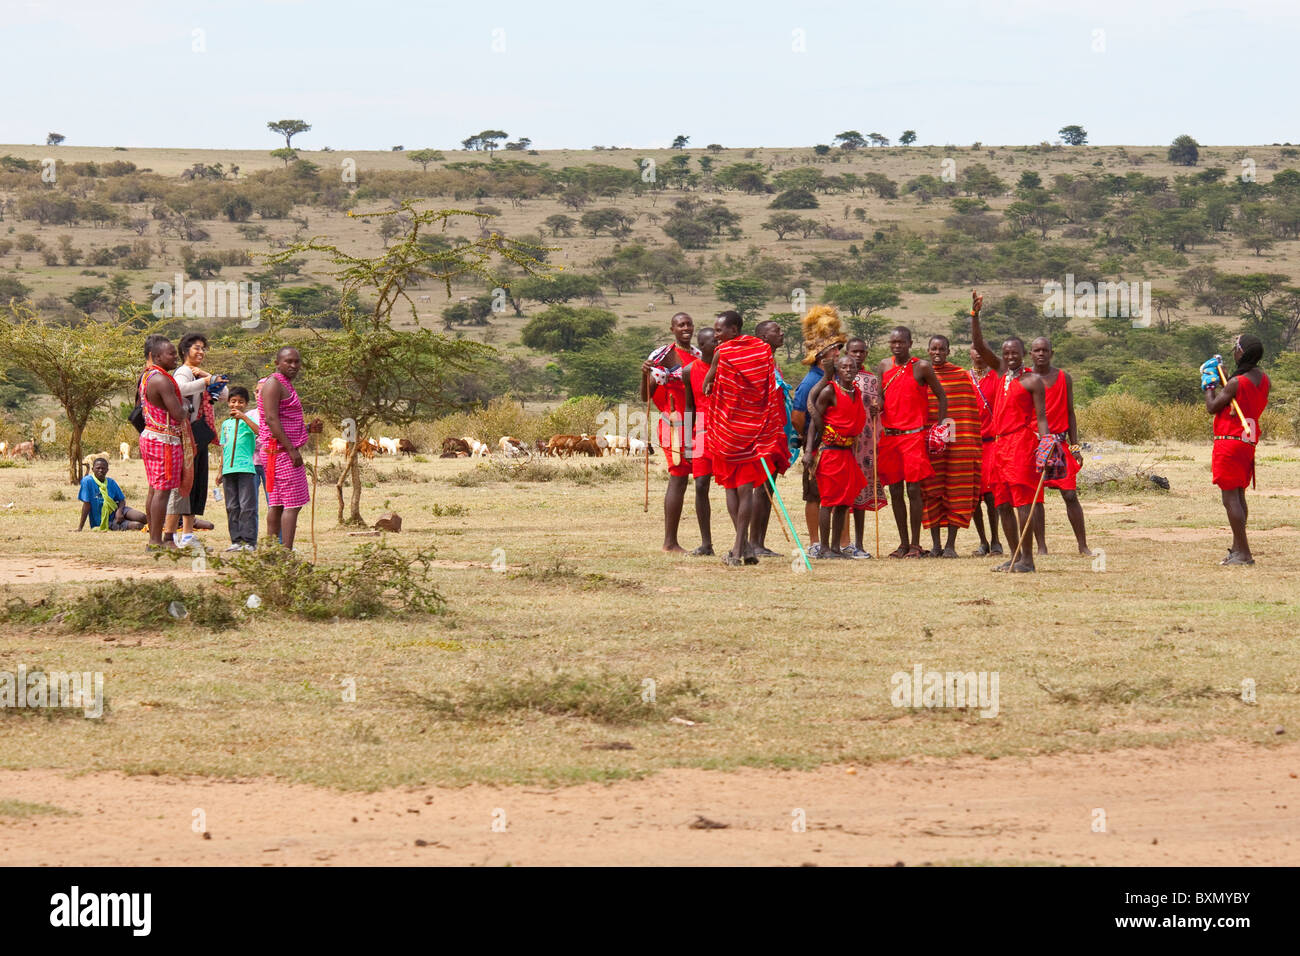 Tourtists visiting a Maasai village on the Masai Mara, Kenya Stock Photo